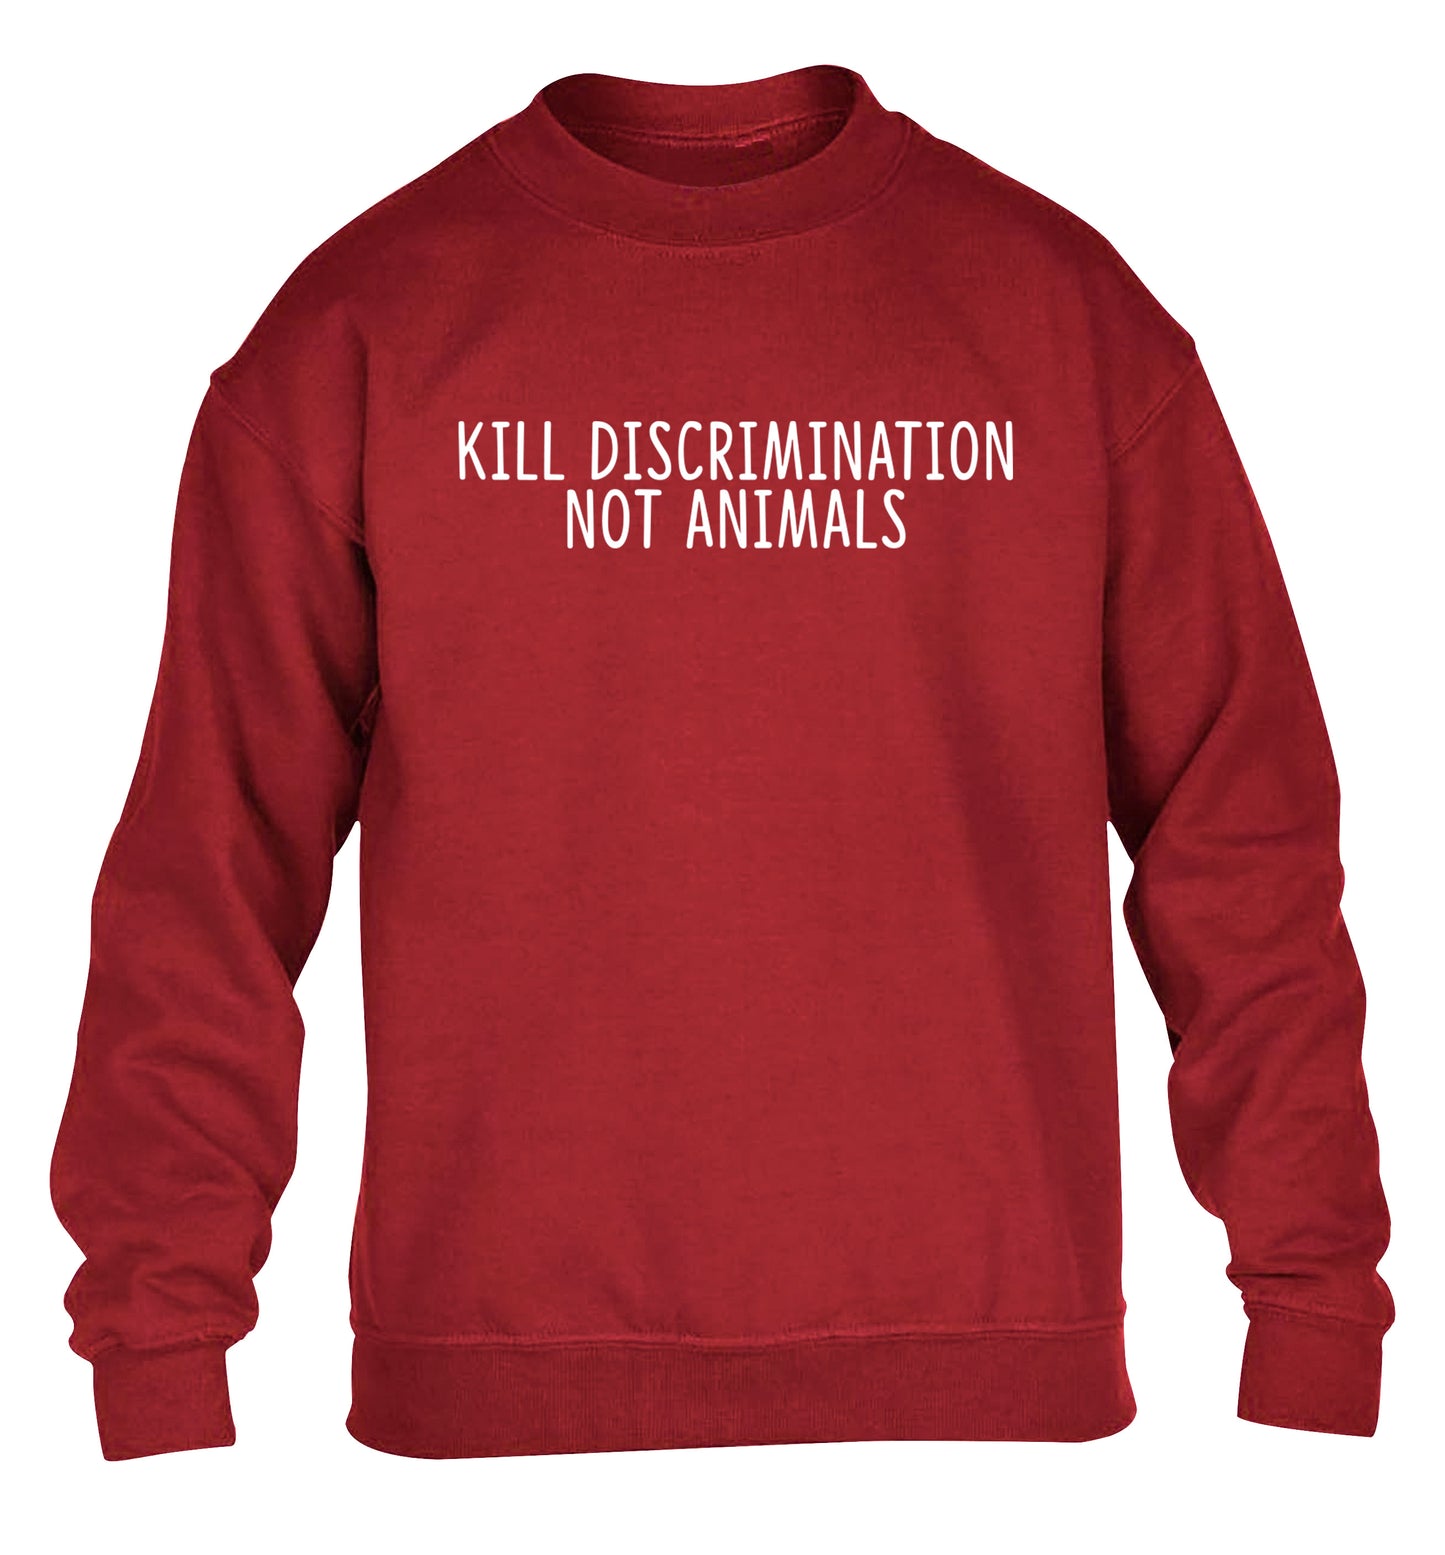 Kill Discrimination Not Animals children's grey sweater 12-13 Years